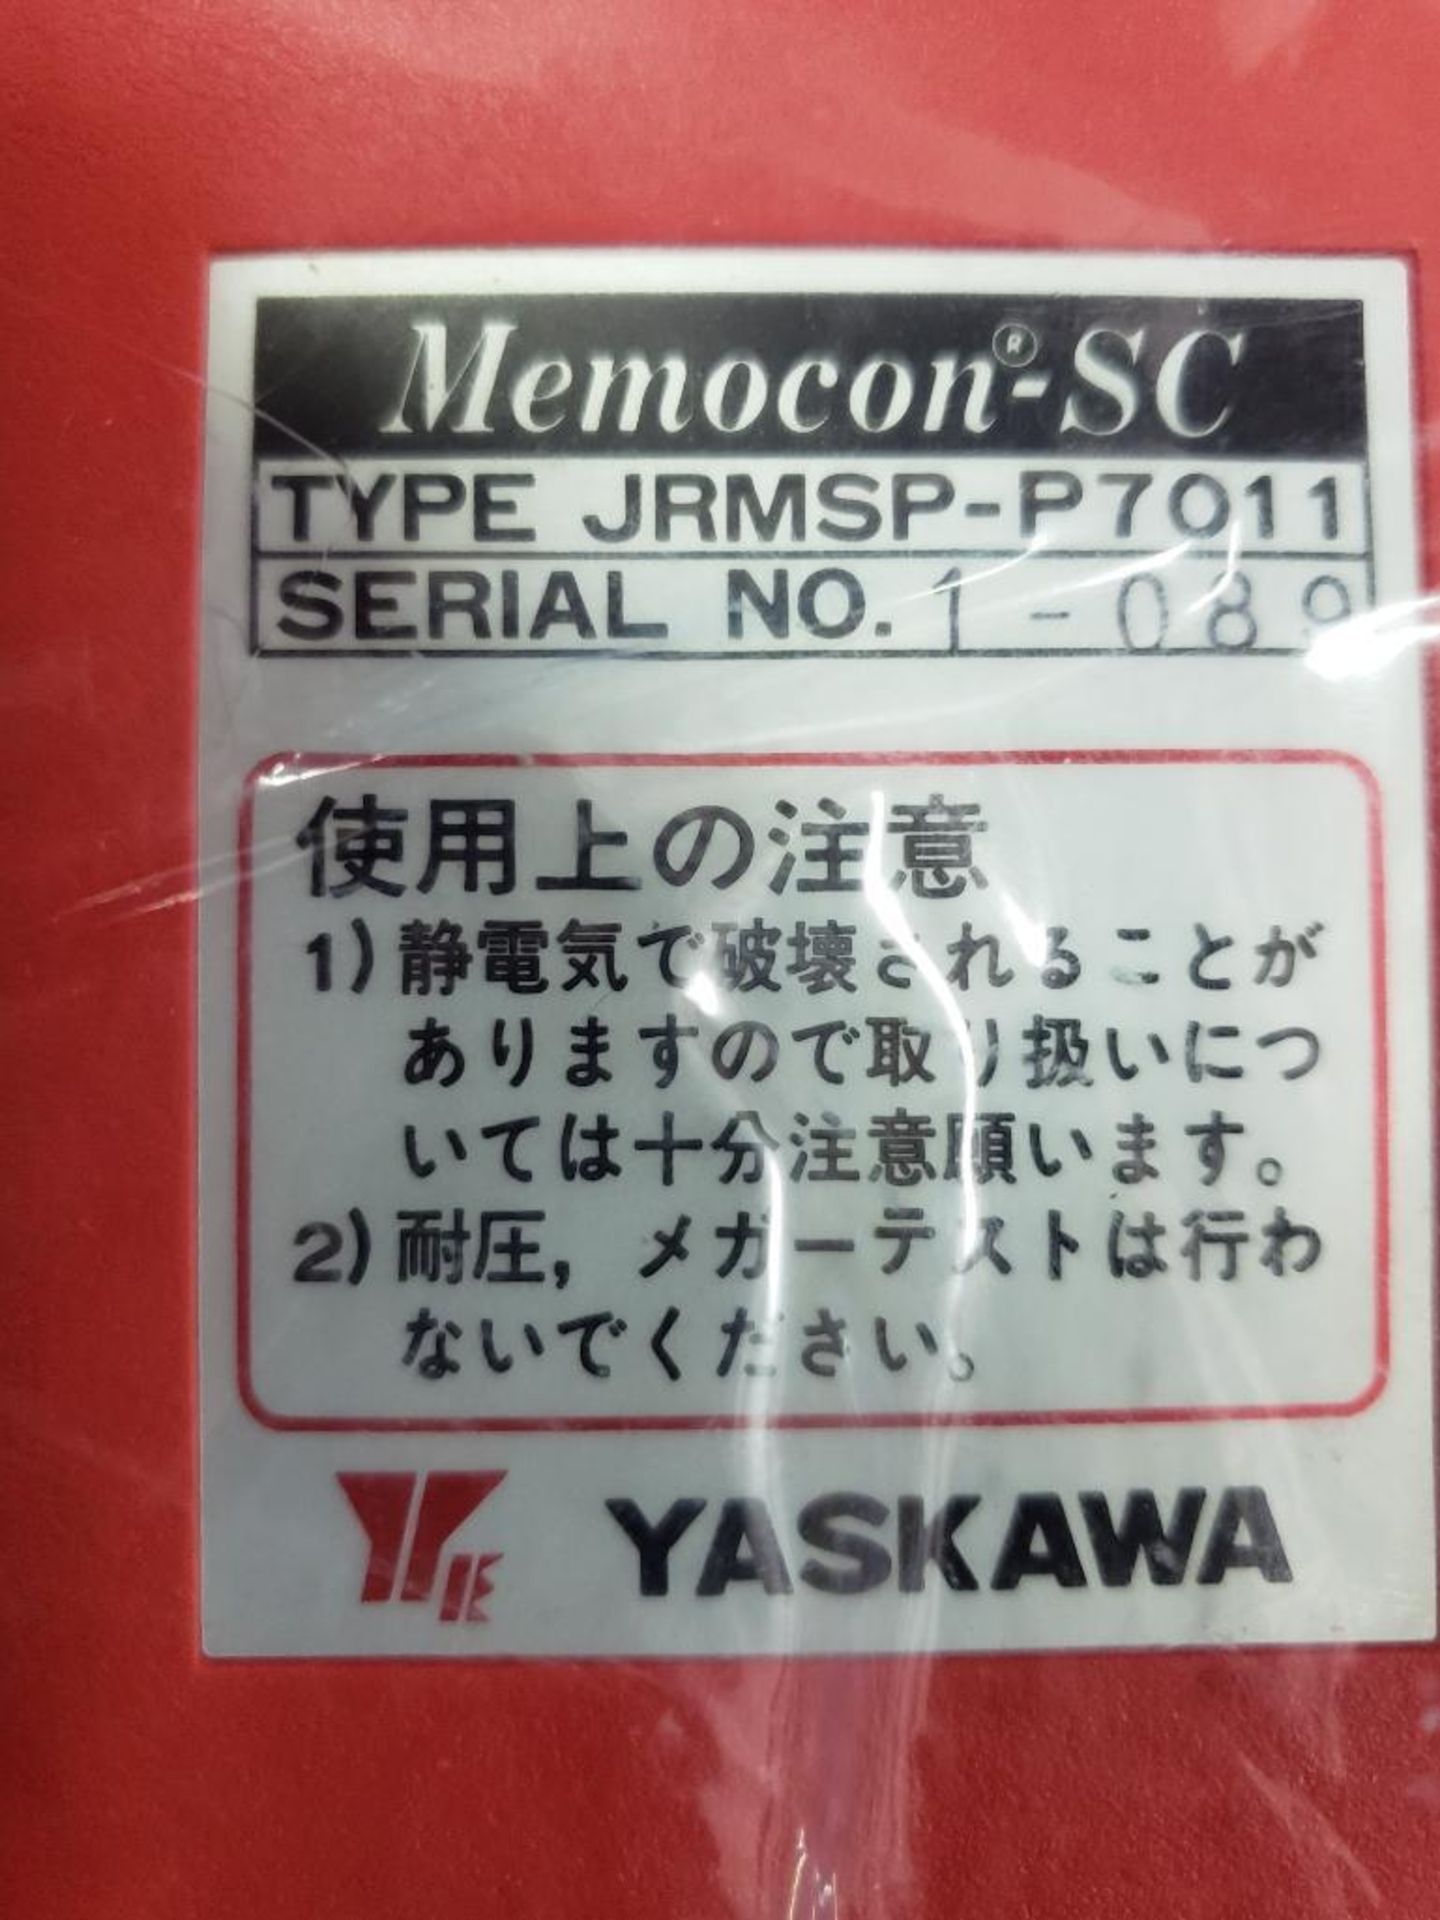 Yaskawa JRMSP-_7011 Memocon-SC power supply. - Image 4 of 4